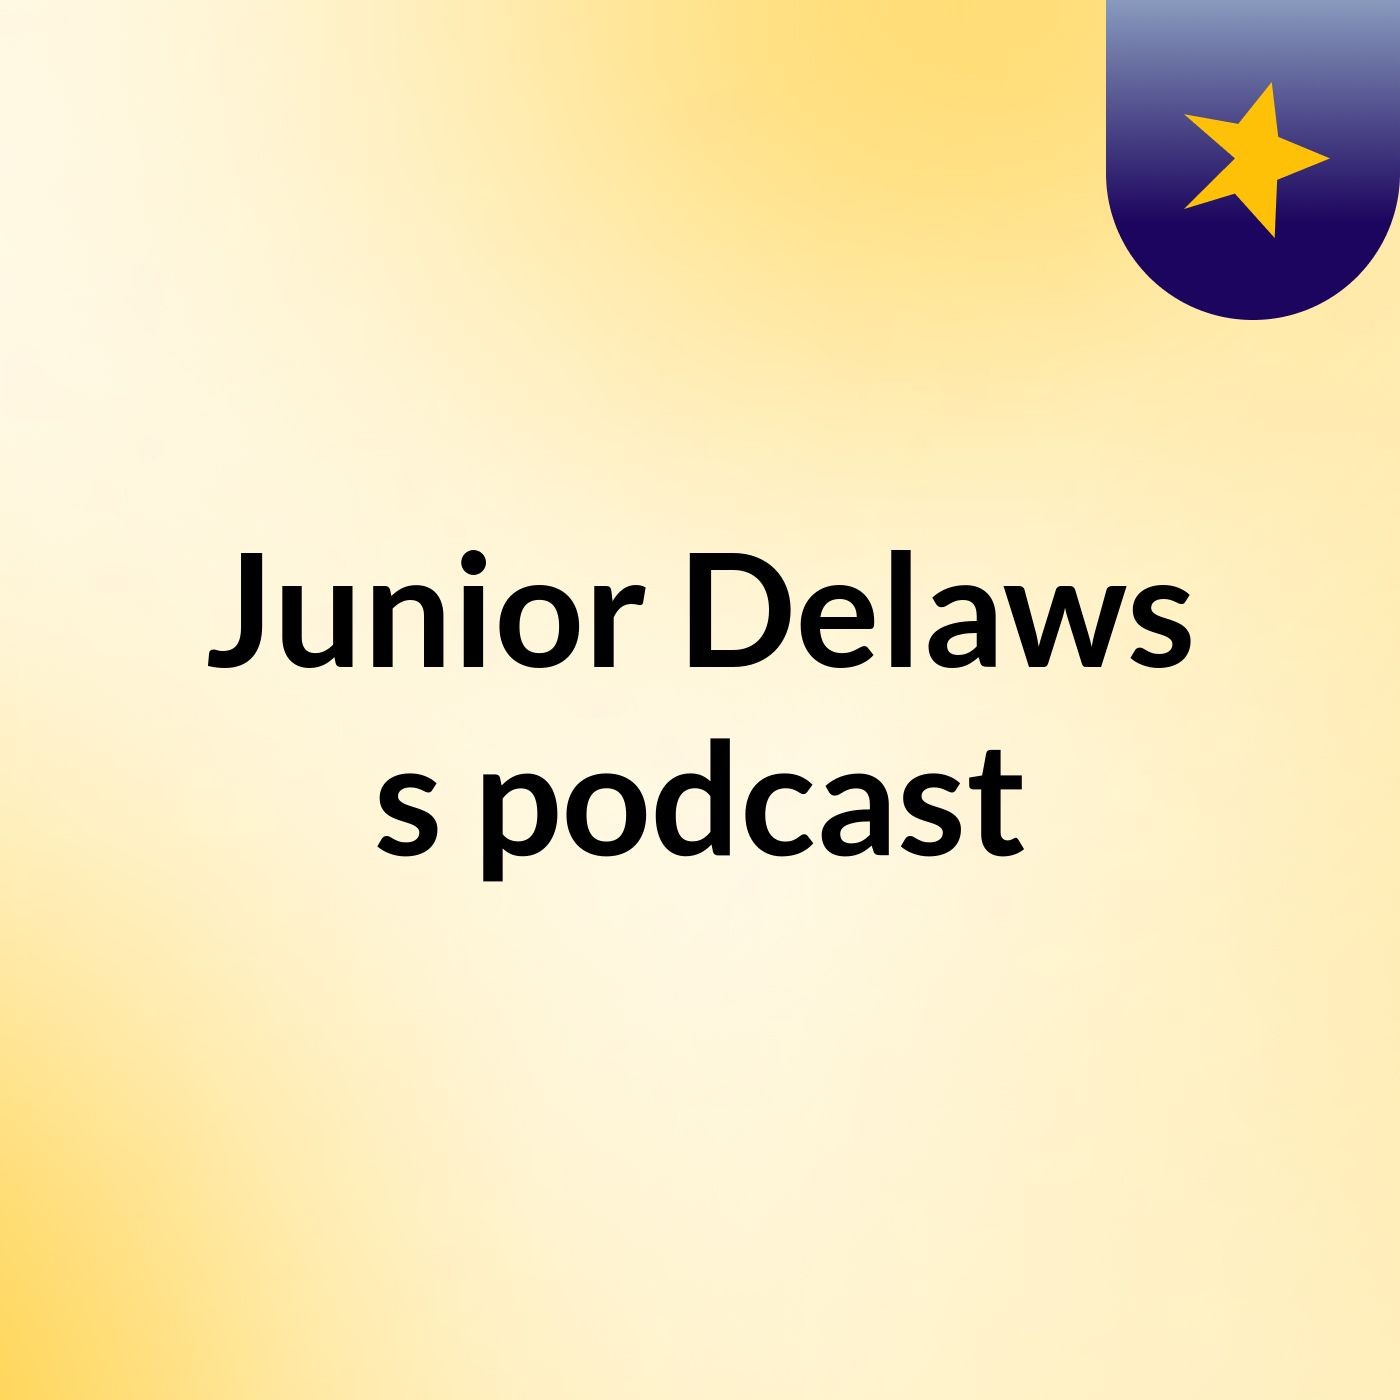 Episode 2 - Junior Delaws's podcast